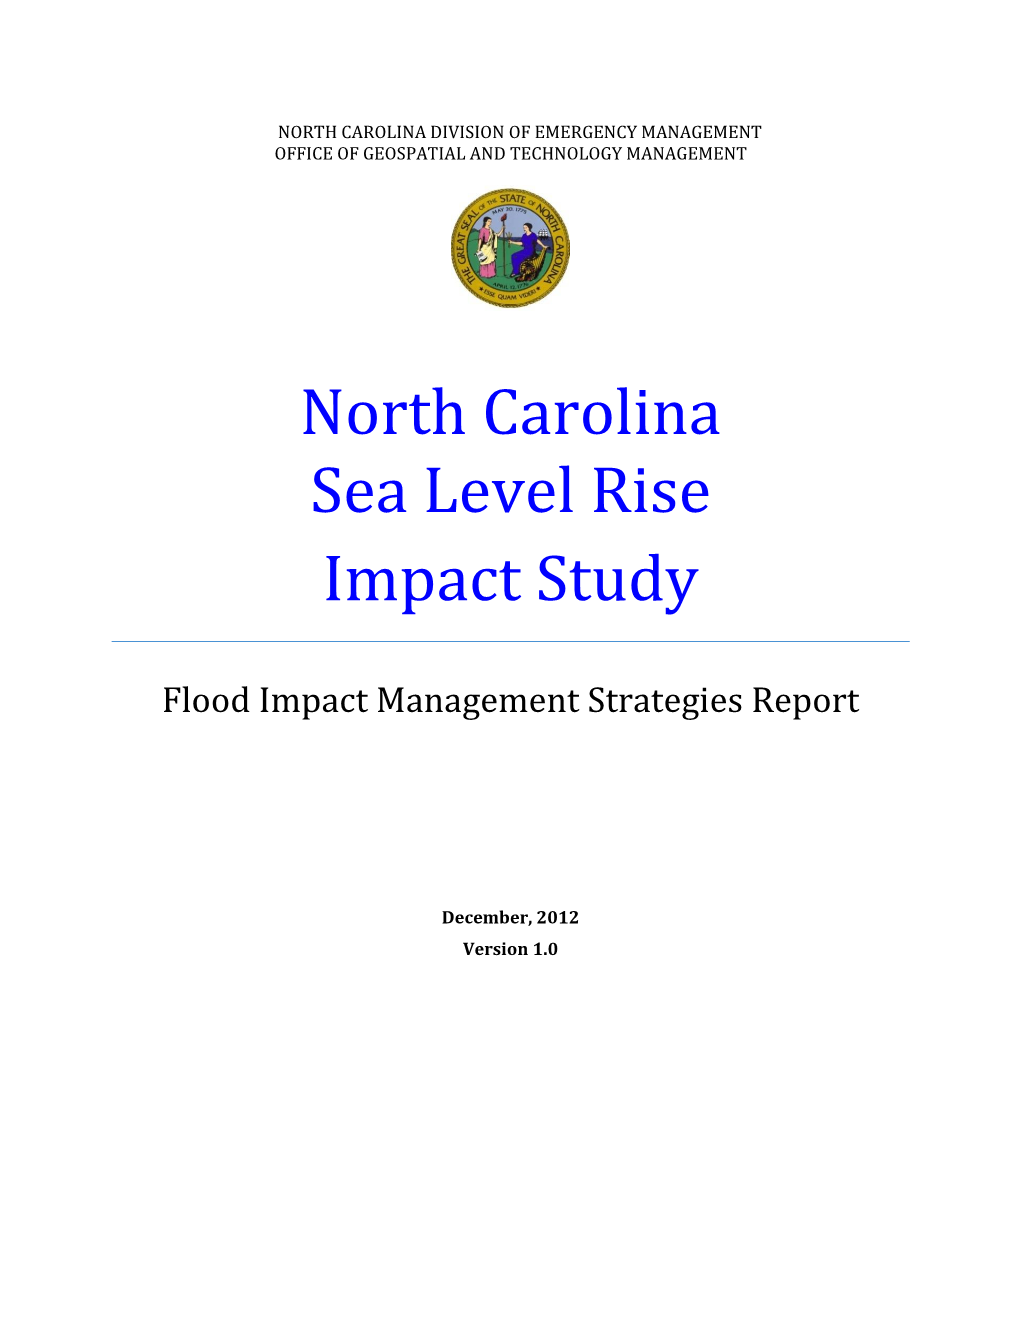 North Carolina Sea Level Rise Risk Management Study